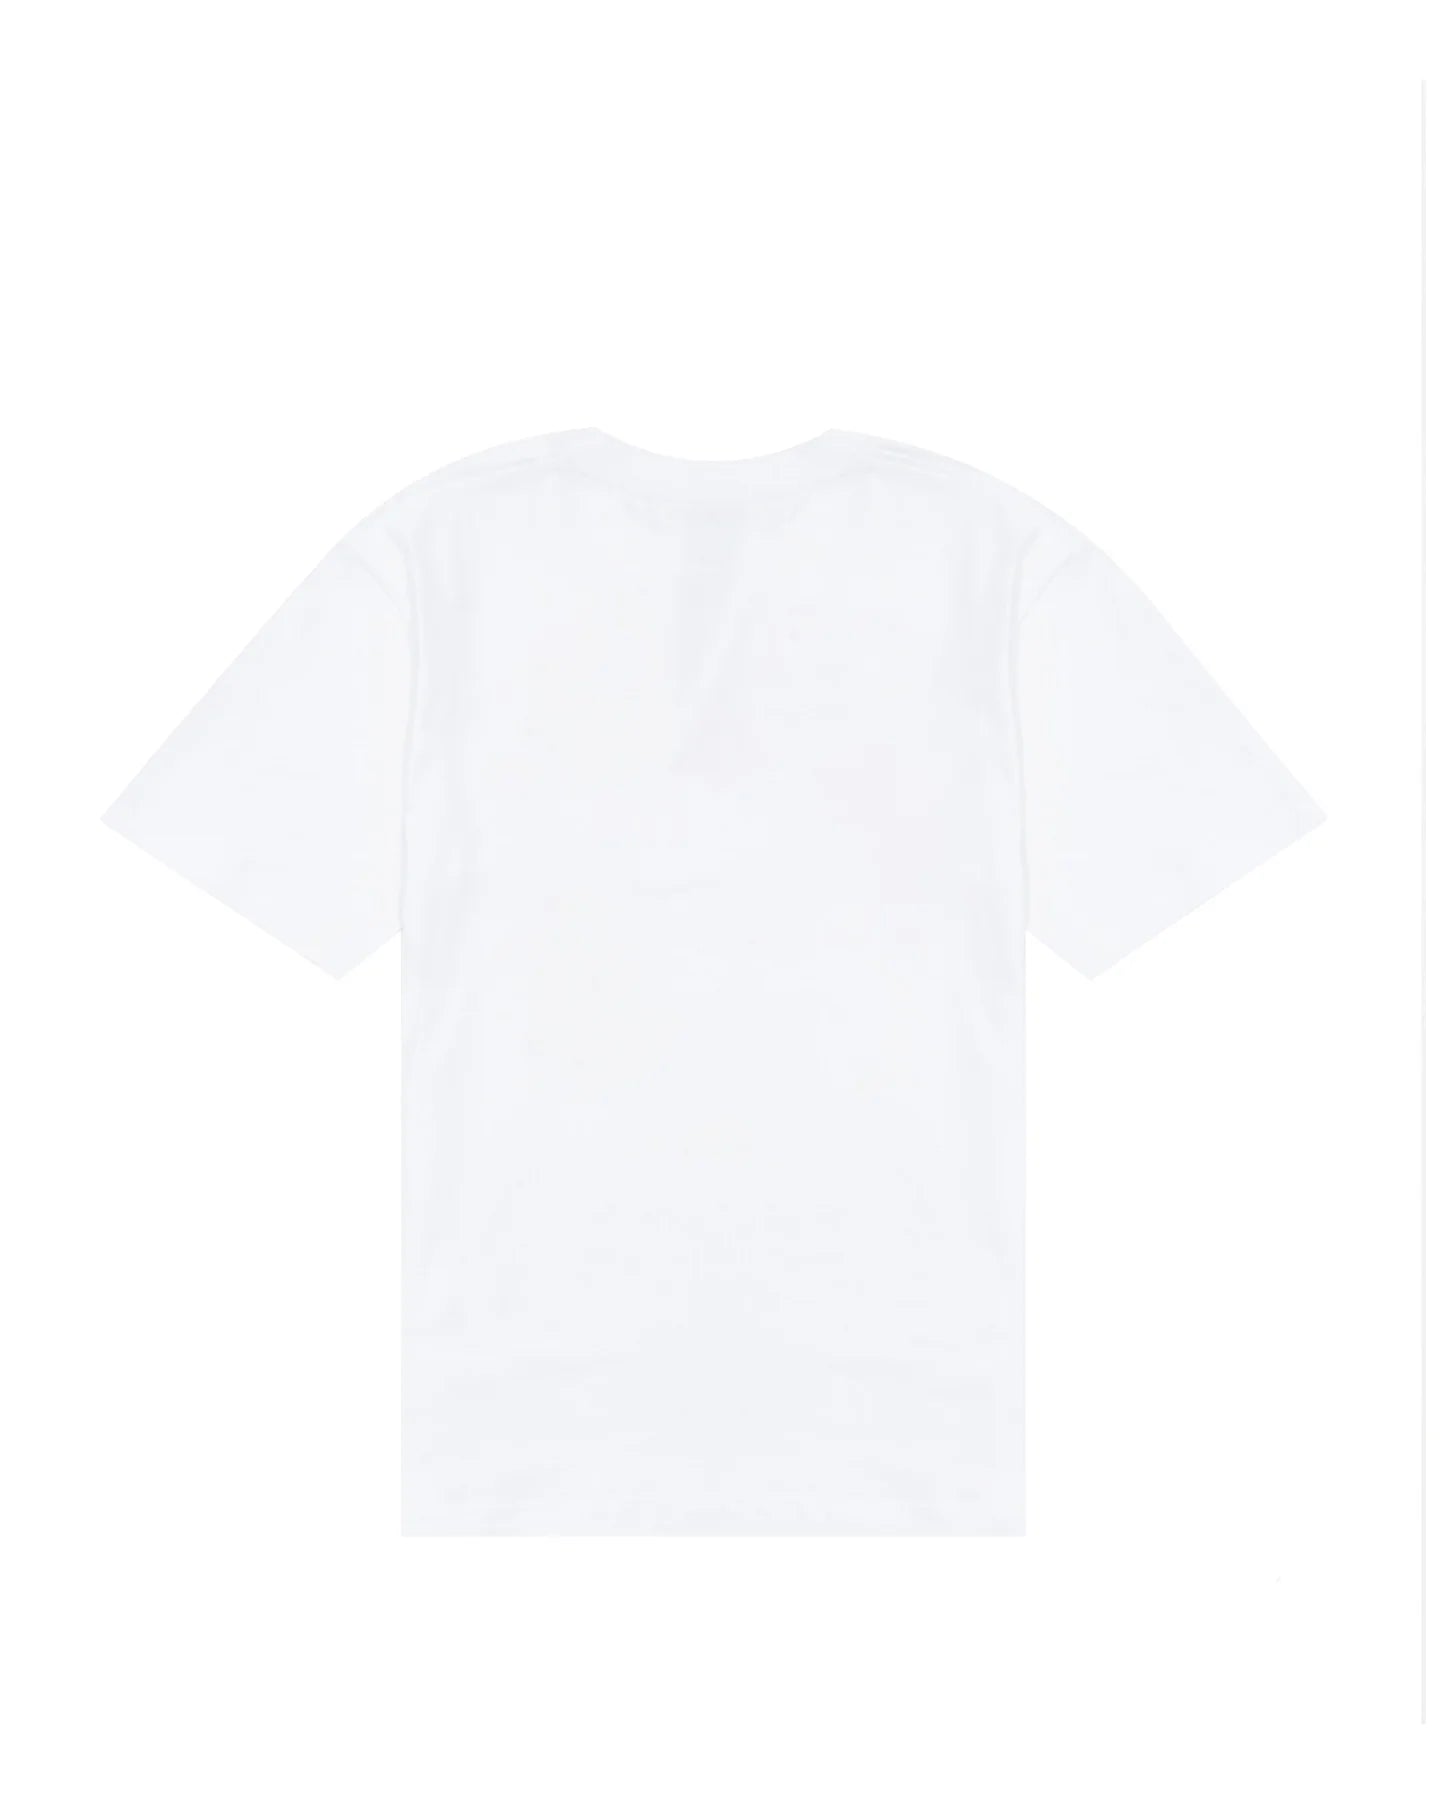 Hikerdelic Glow in The Dark T-Shirt White